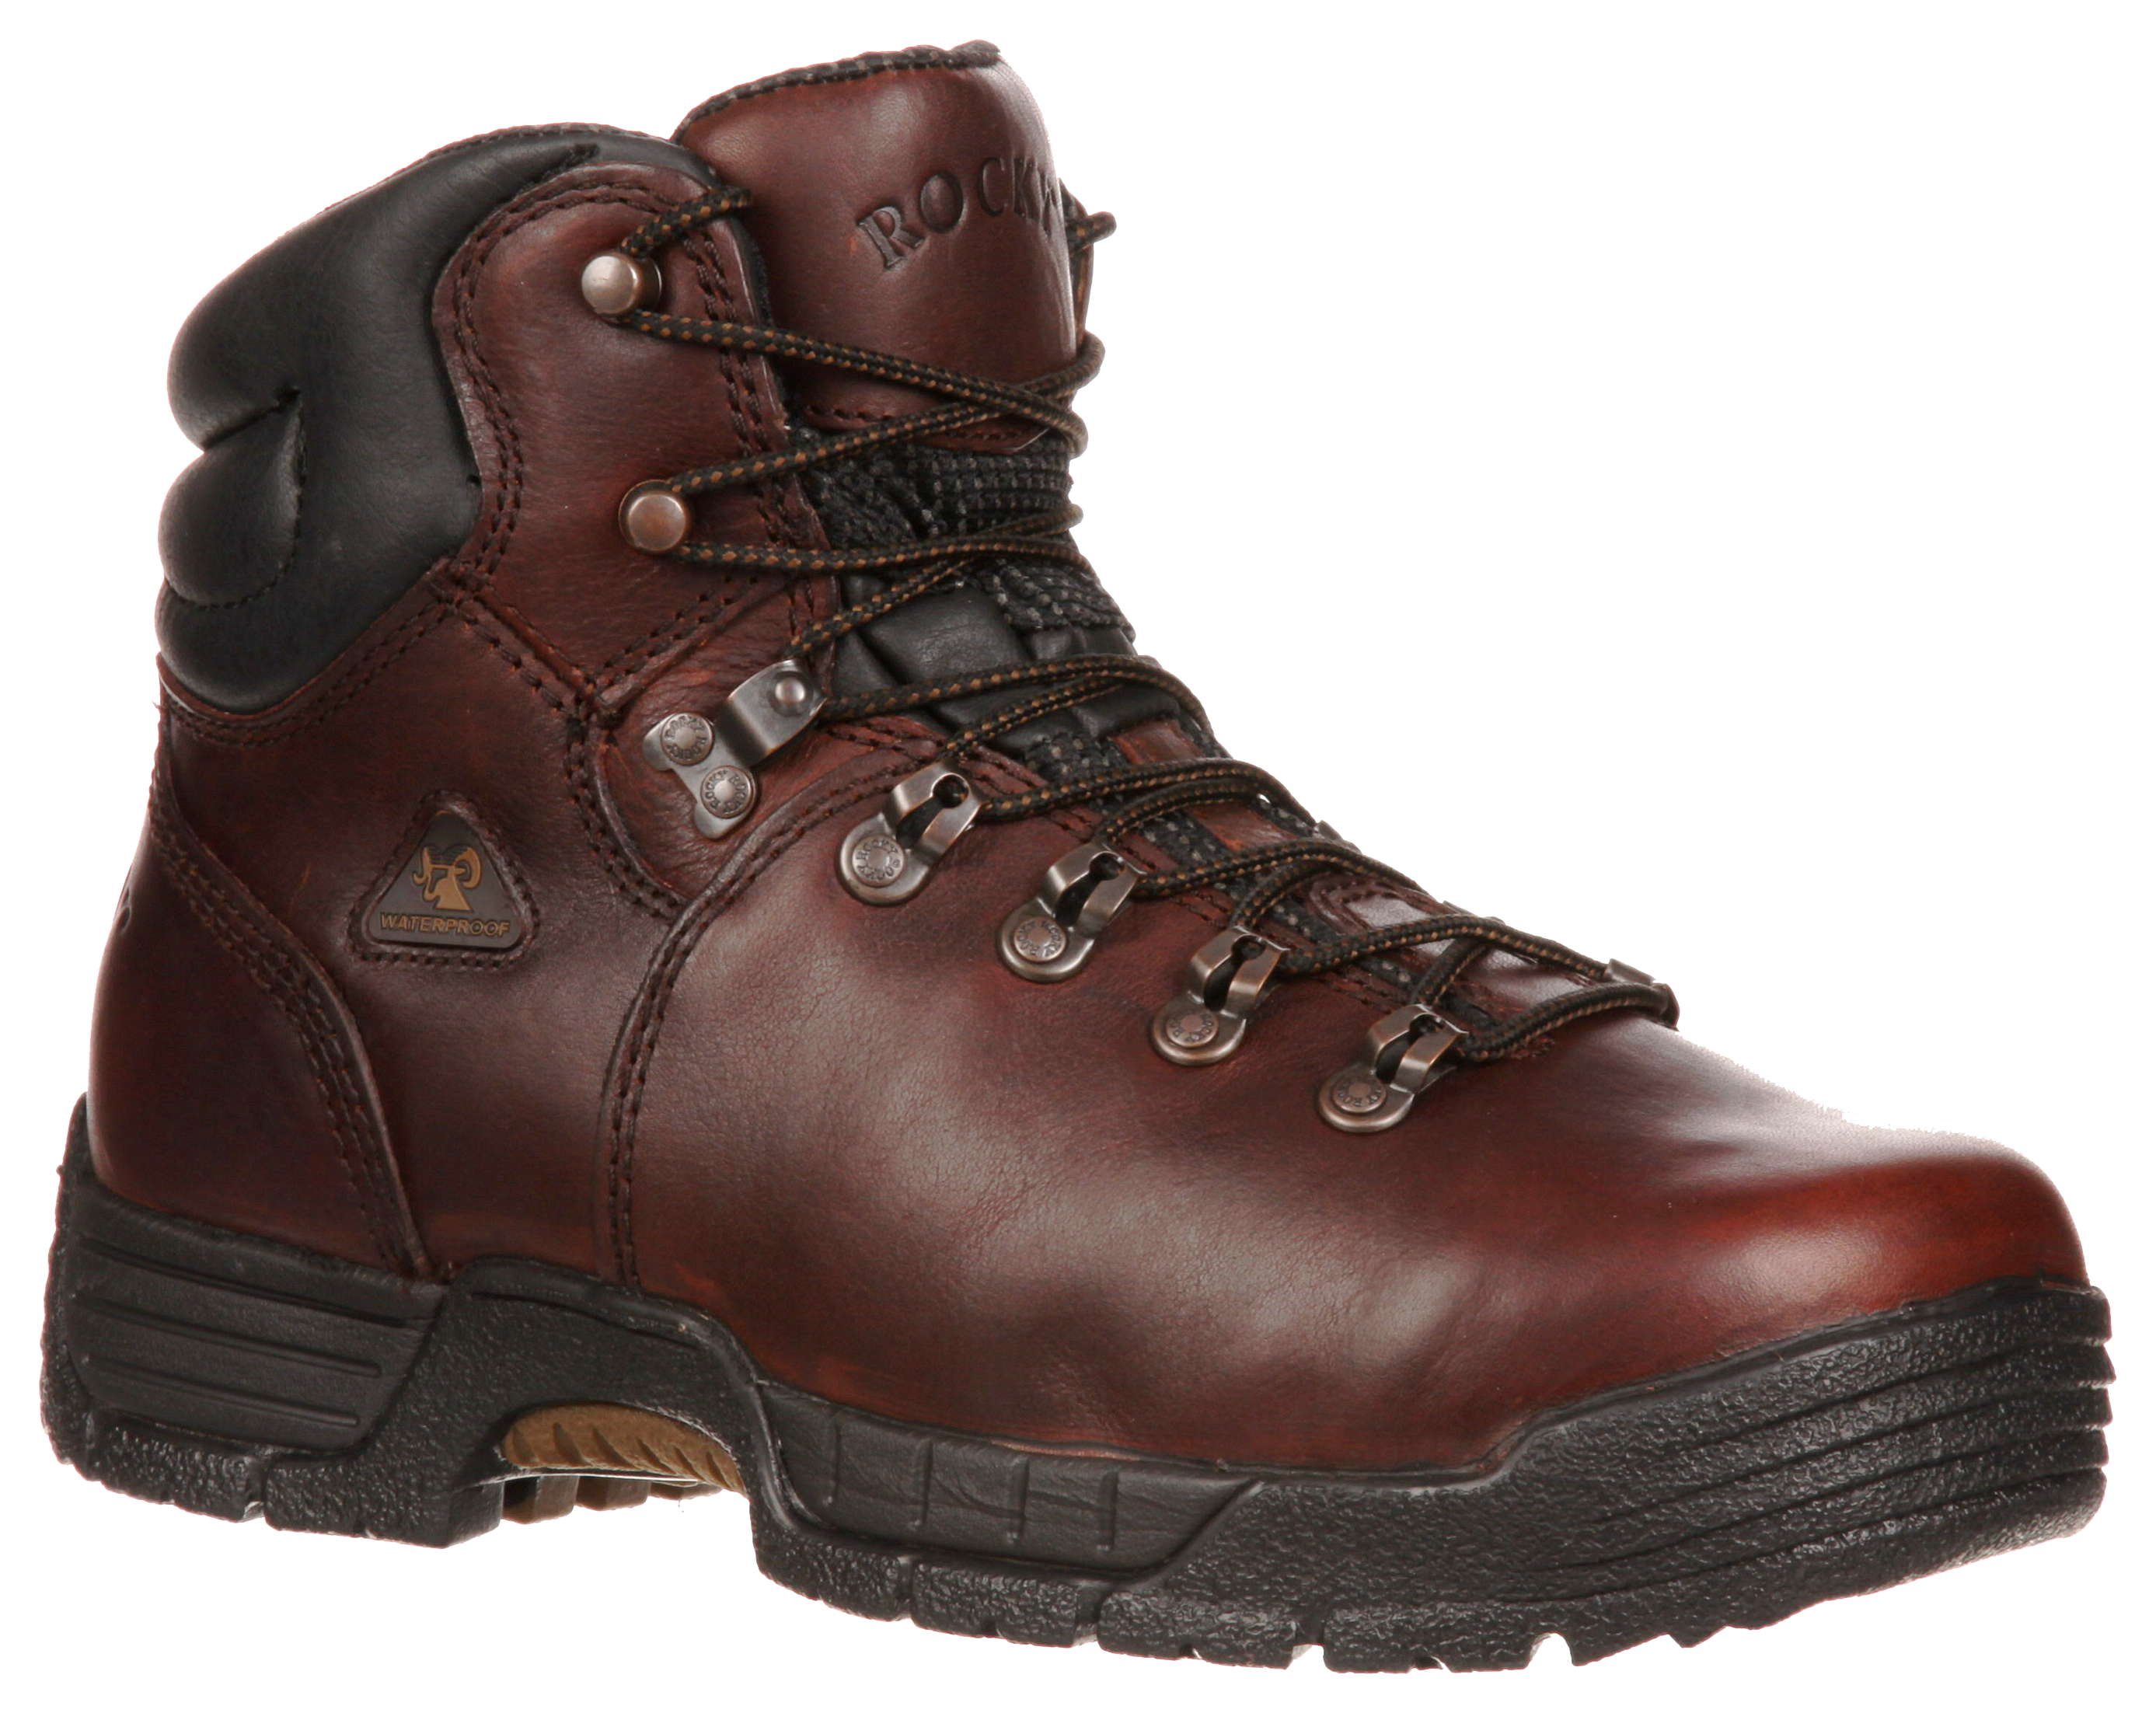 ROCKY MobiLite Waterproof Steel Toe Work Boots for Men - Brown - 9 W